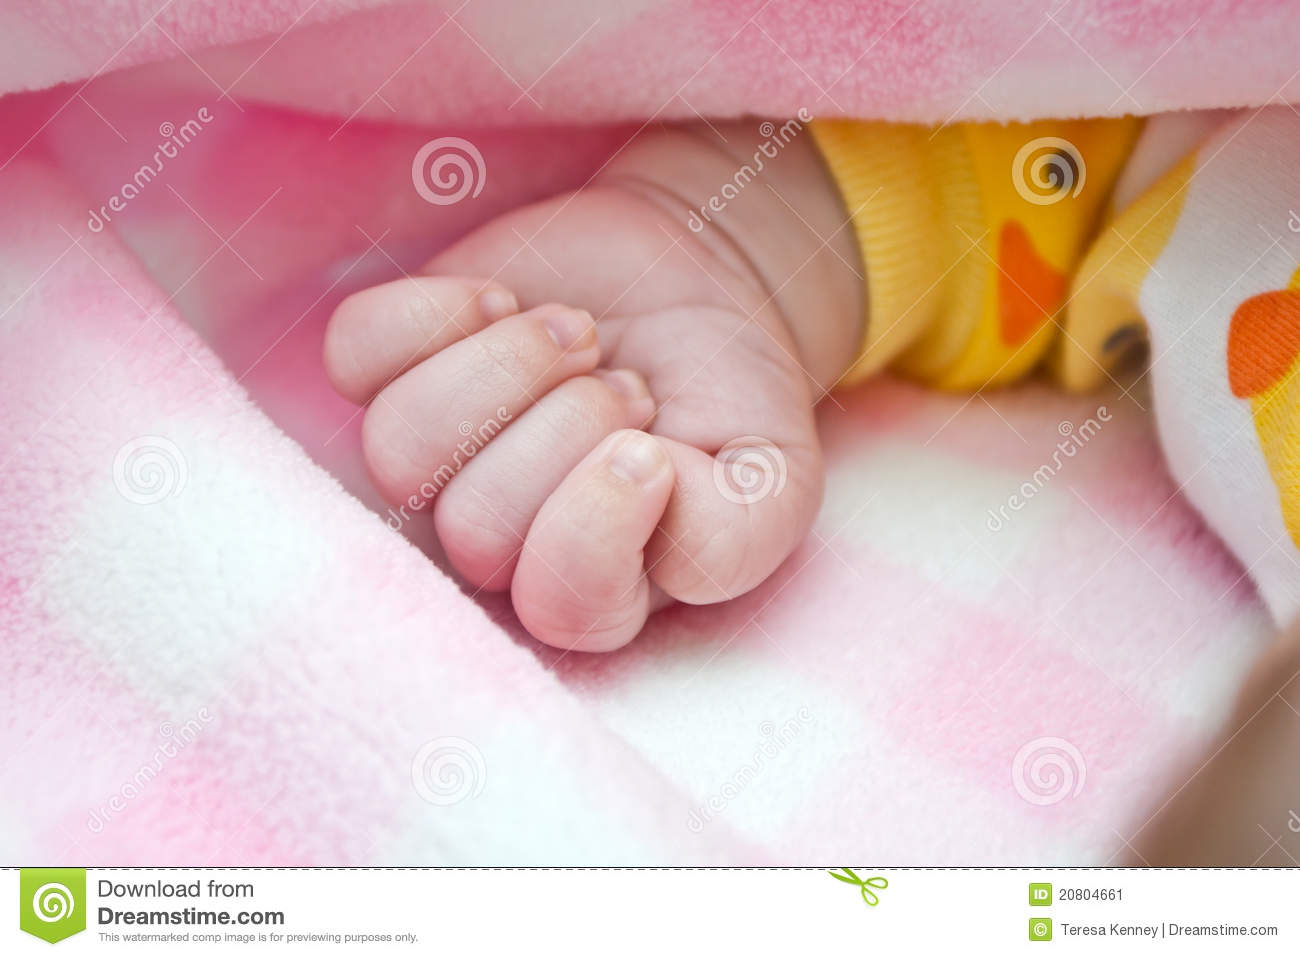 Baby Fist Stock Image   Image  20804661